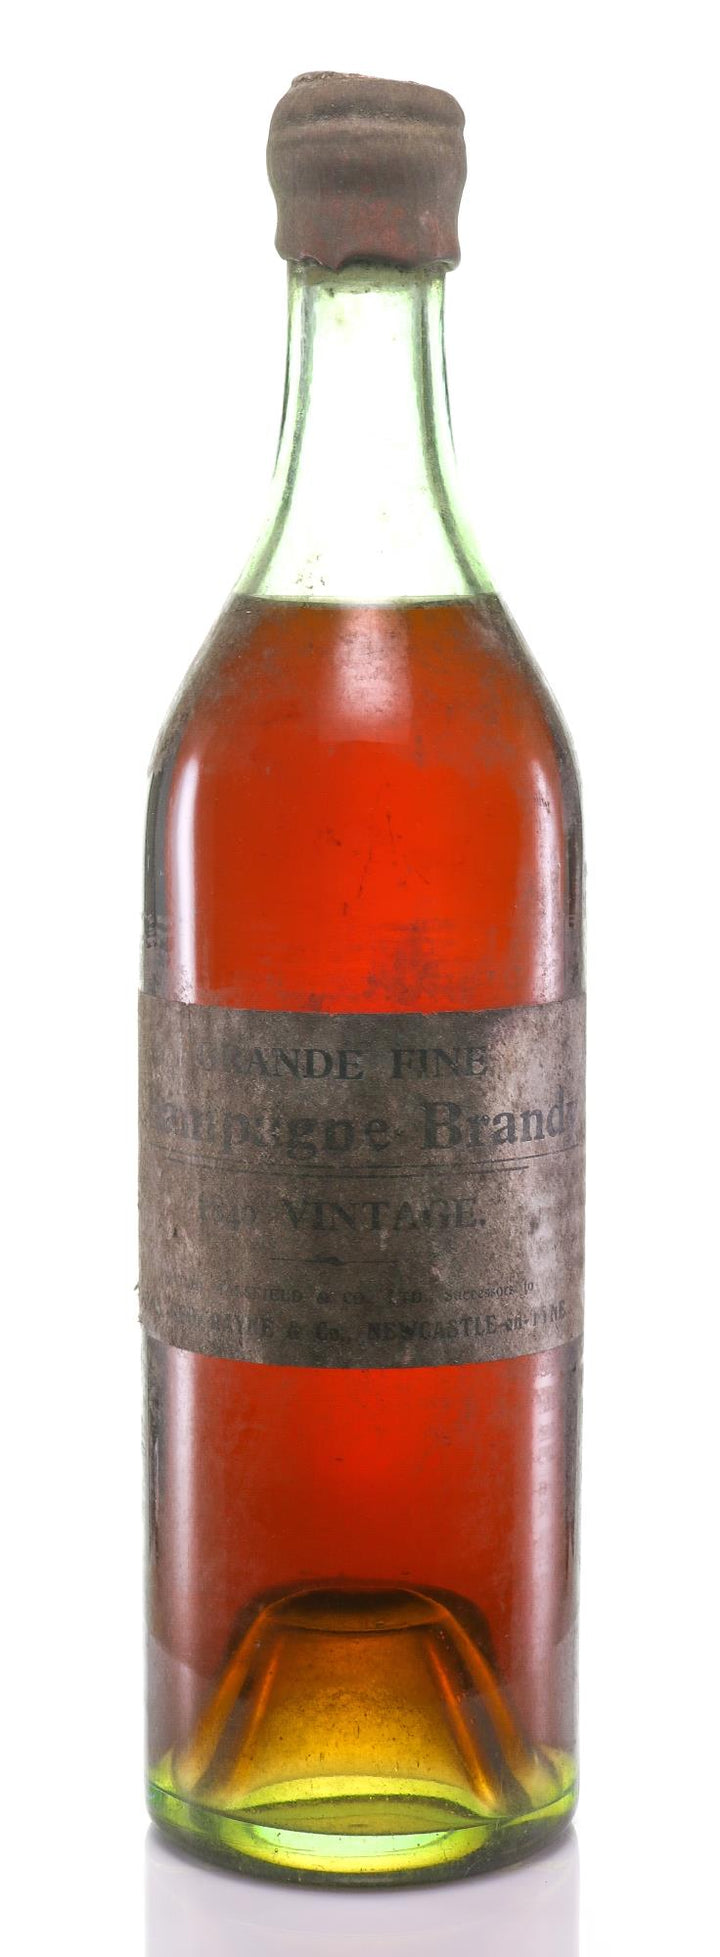 1840 Charles Geo. Rayne Grande Fine Champagne Cognac - Rue Pinard